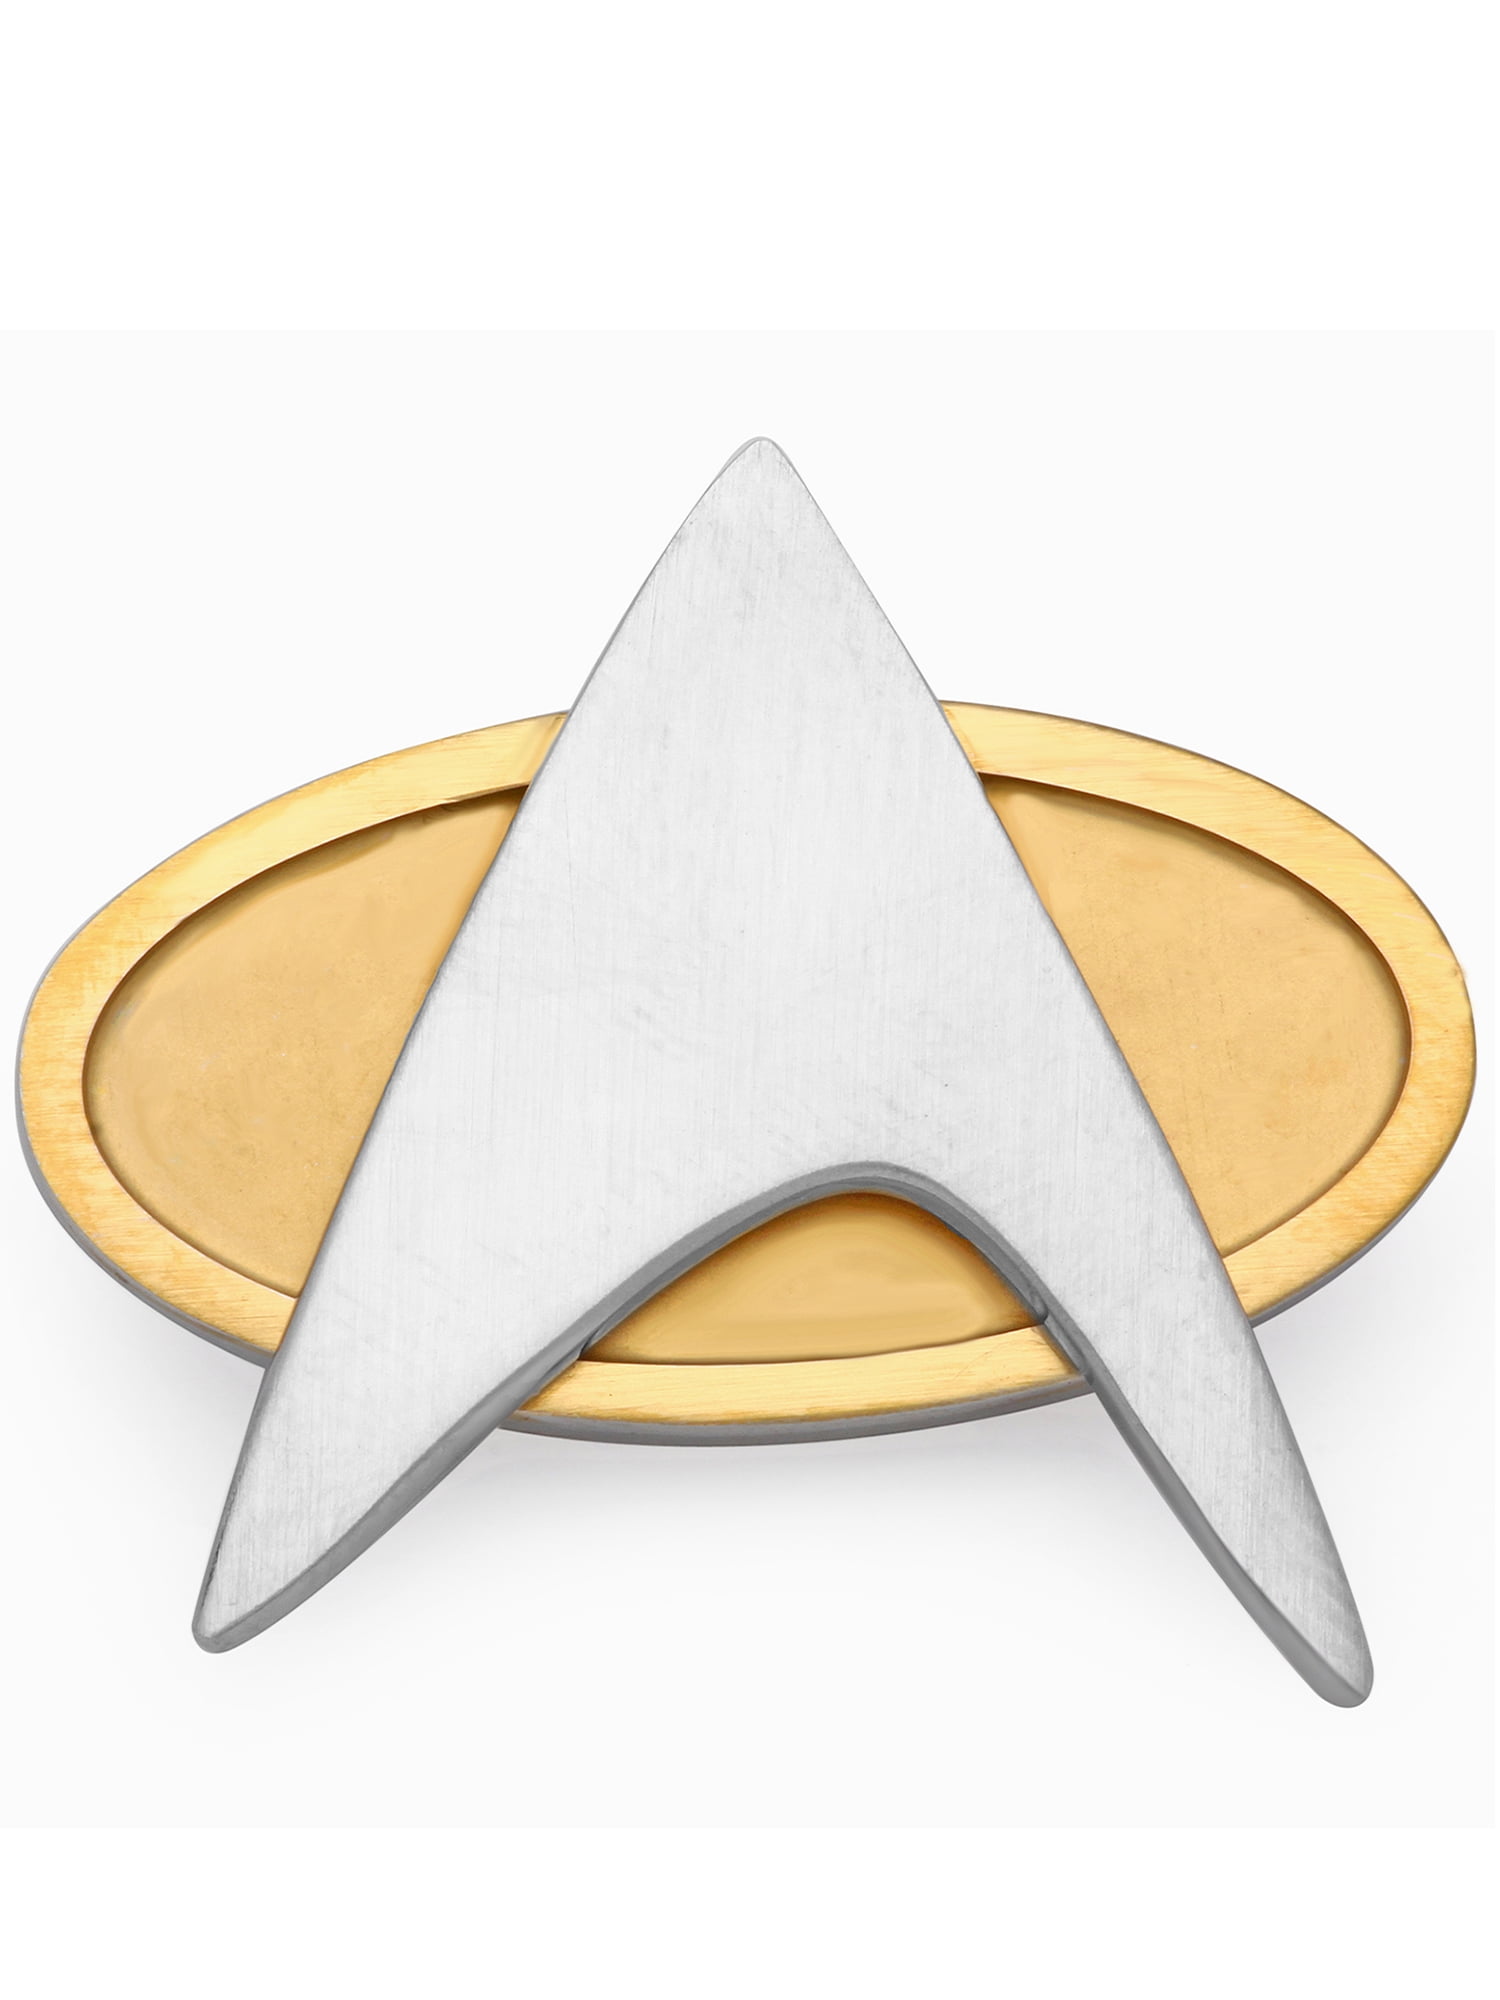 Star Trek Logo Metal Pin brooch Gold color Collectible gift decor cosplay 